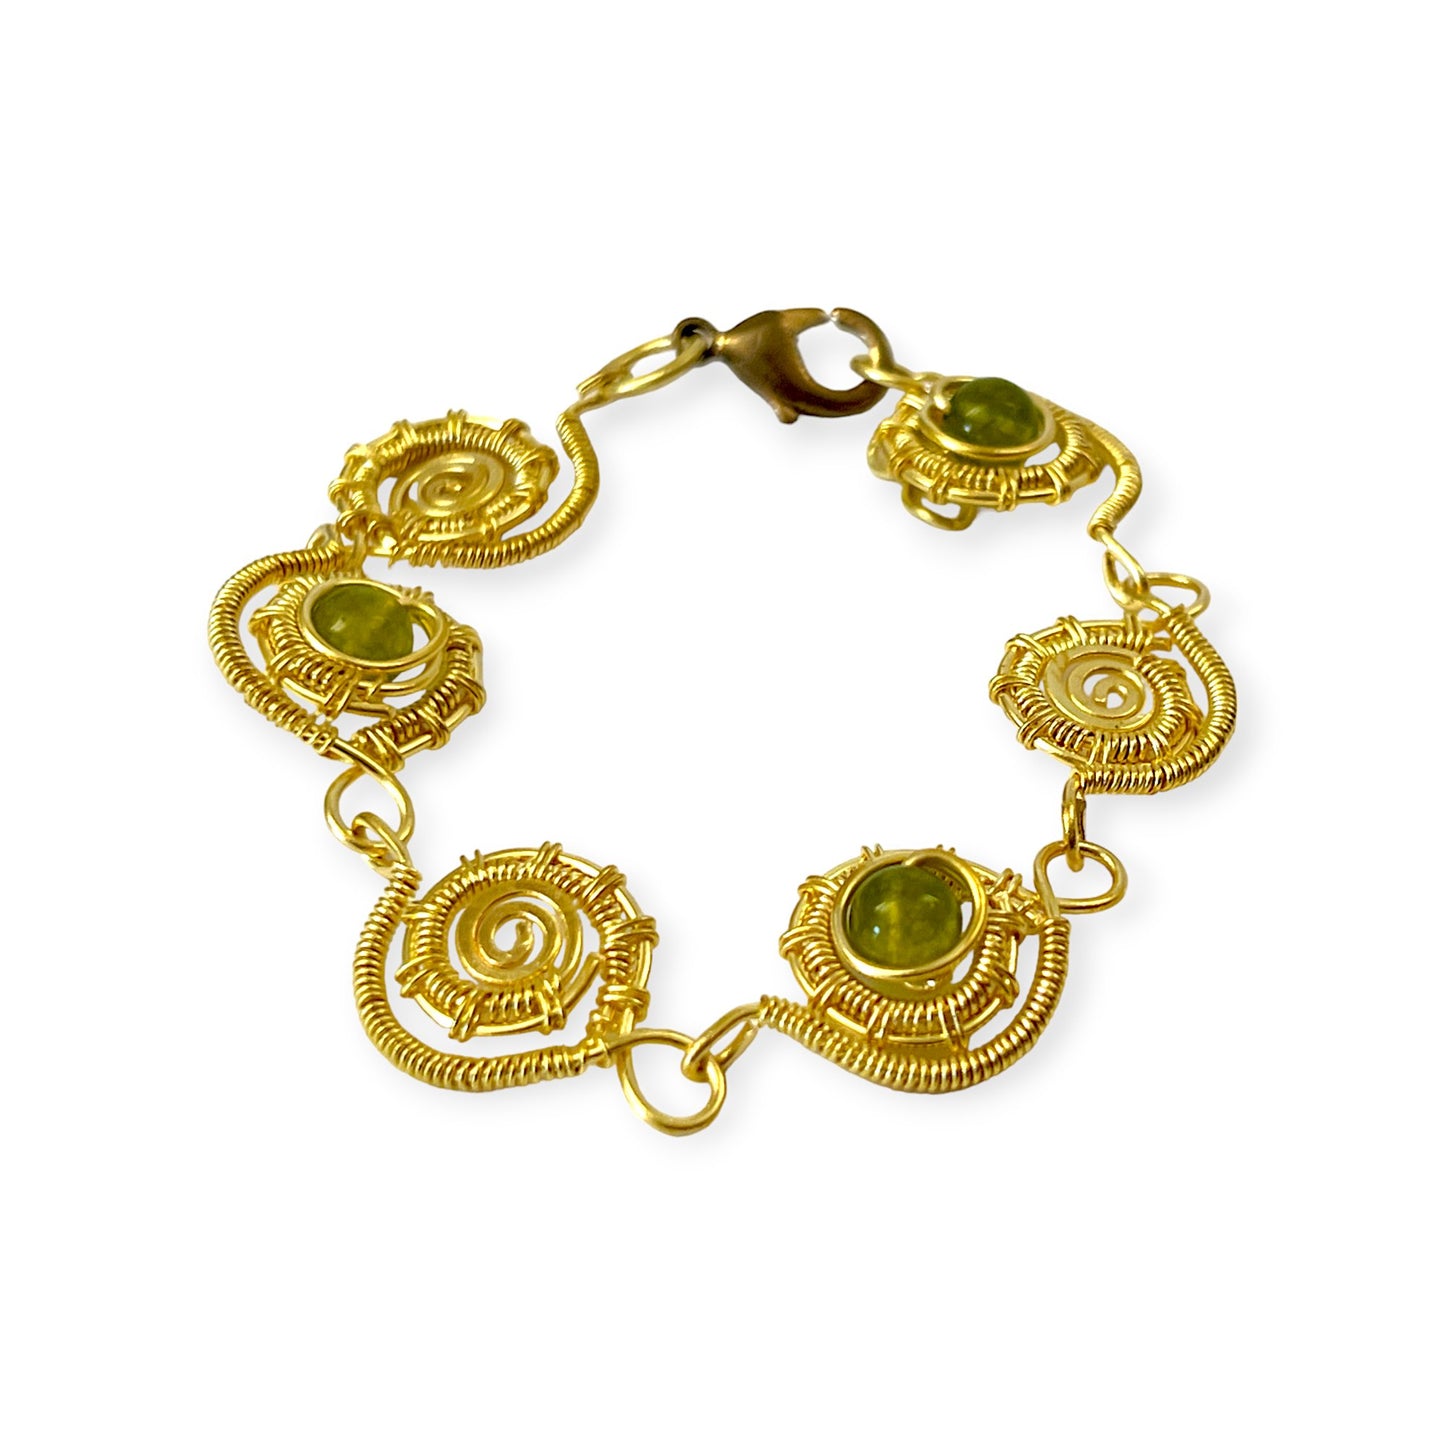 Interlocking swirl bracelet with a hint of green - Sundara Joon